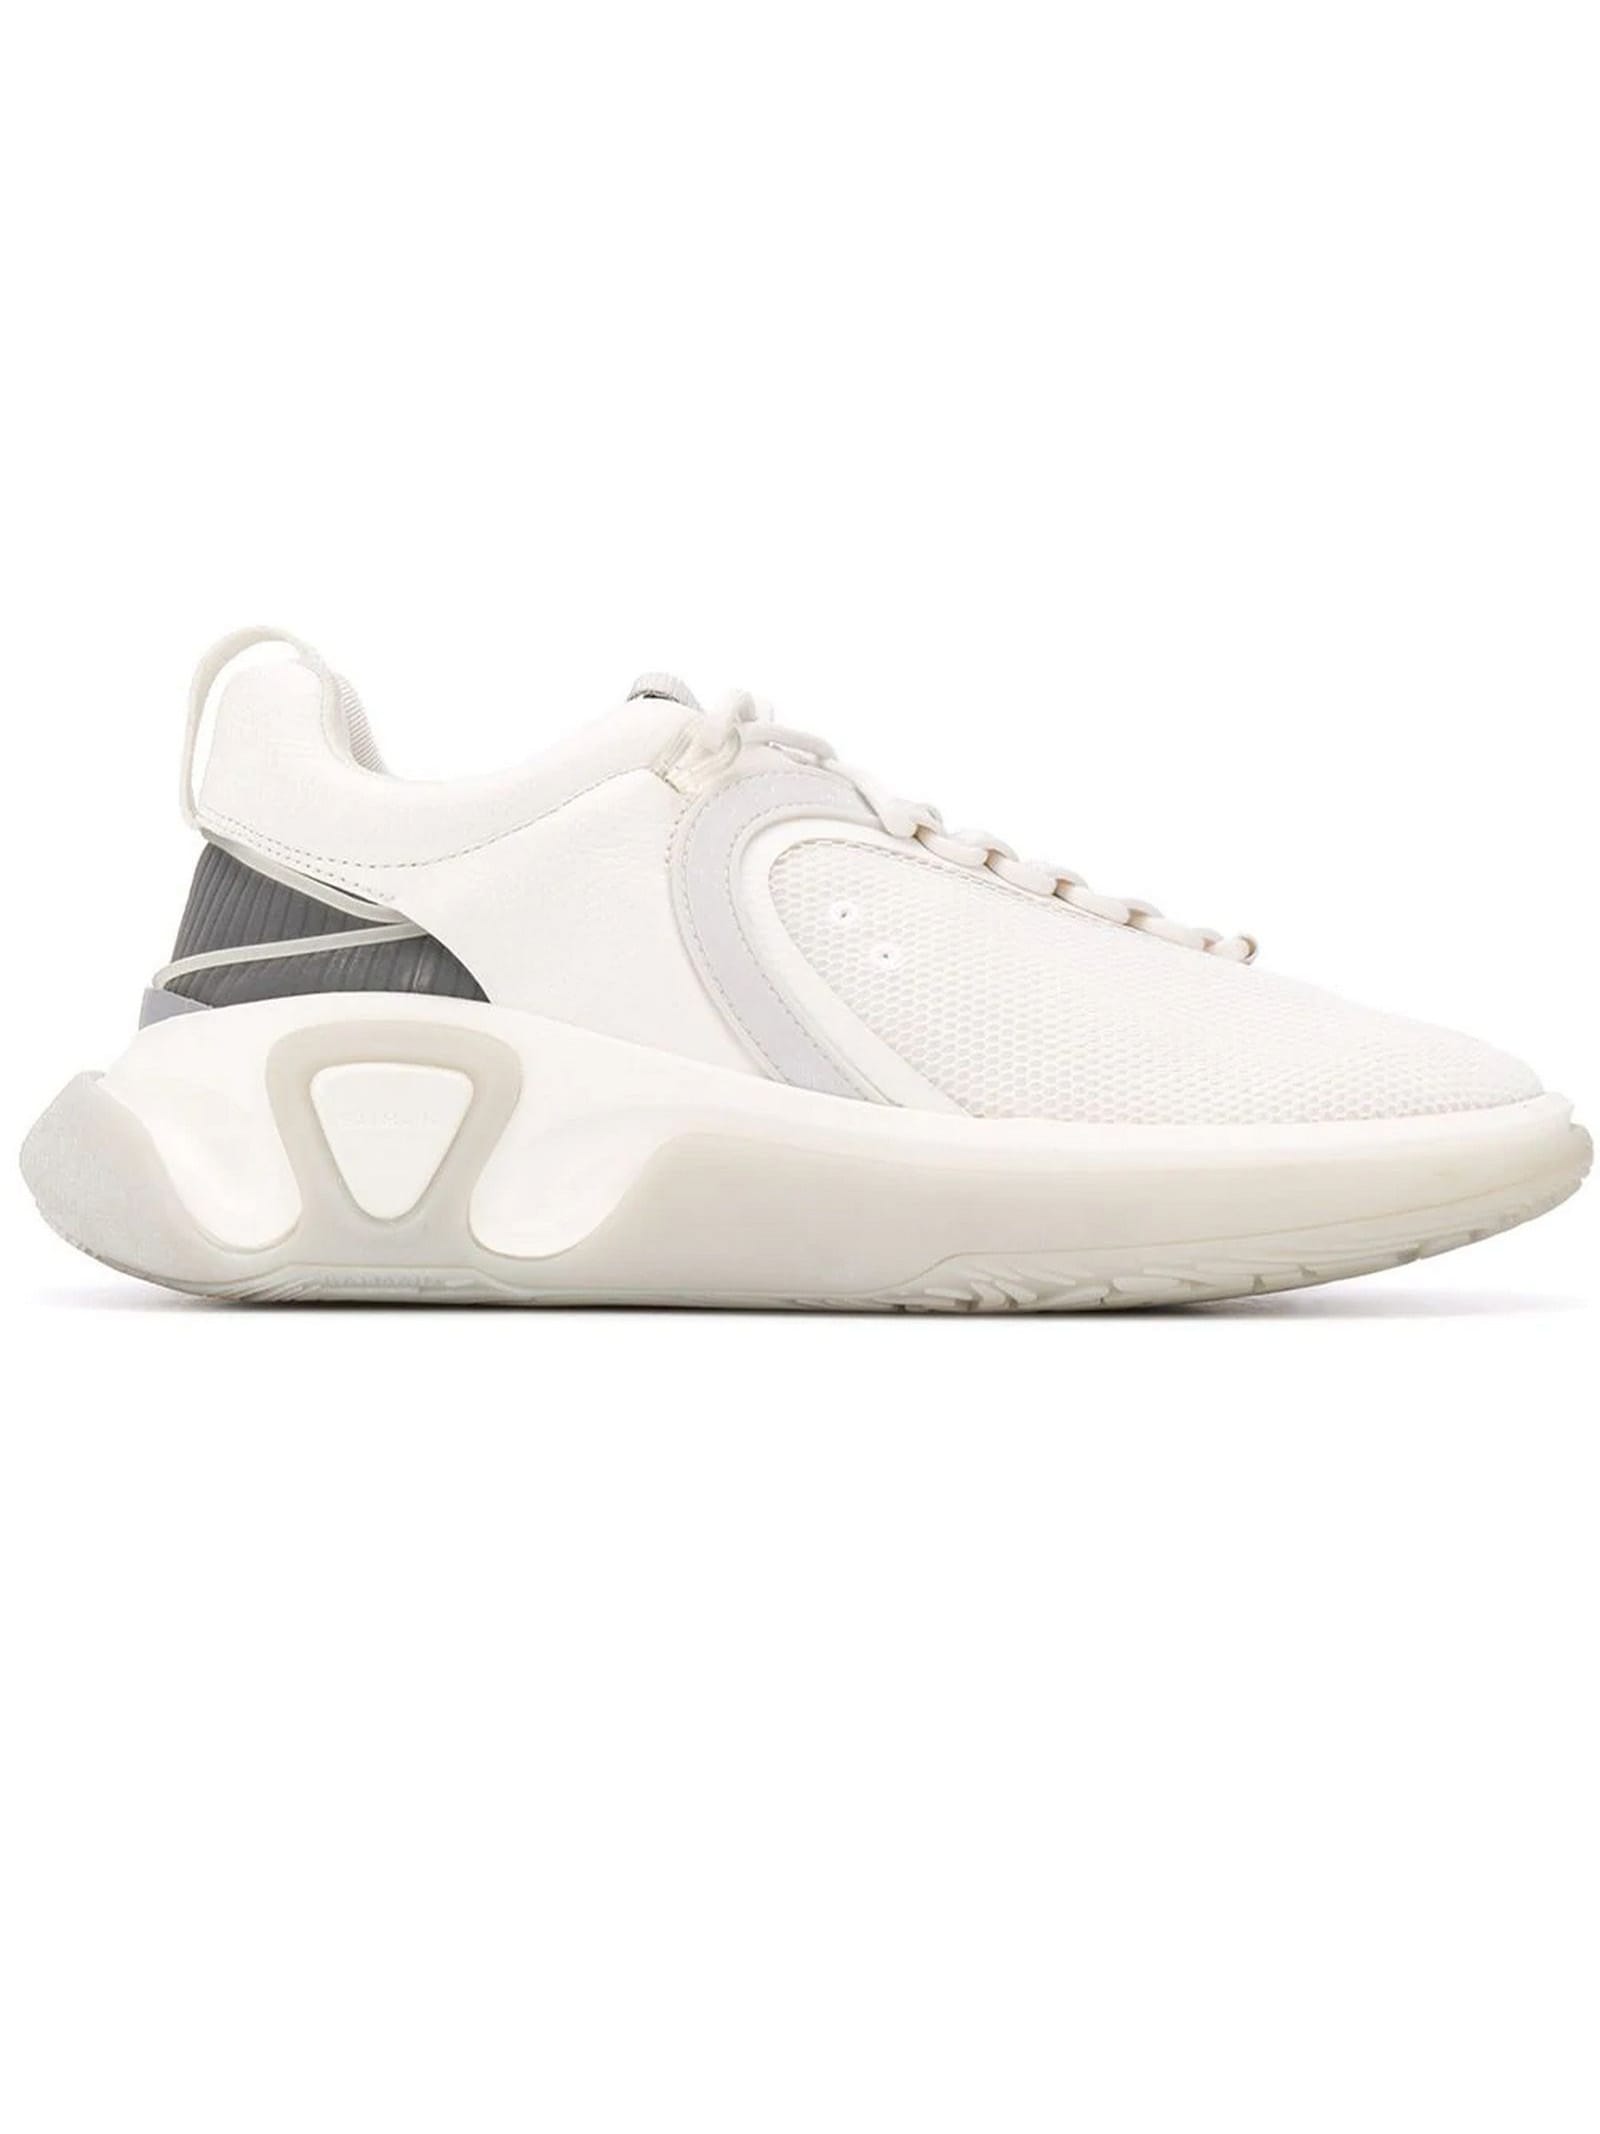 Balmain B-runner White And Grey Sneakers